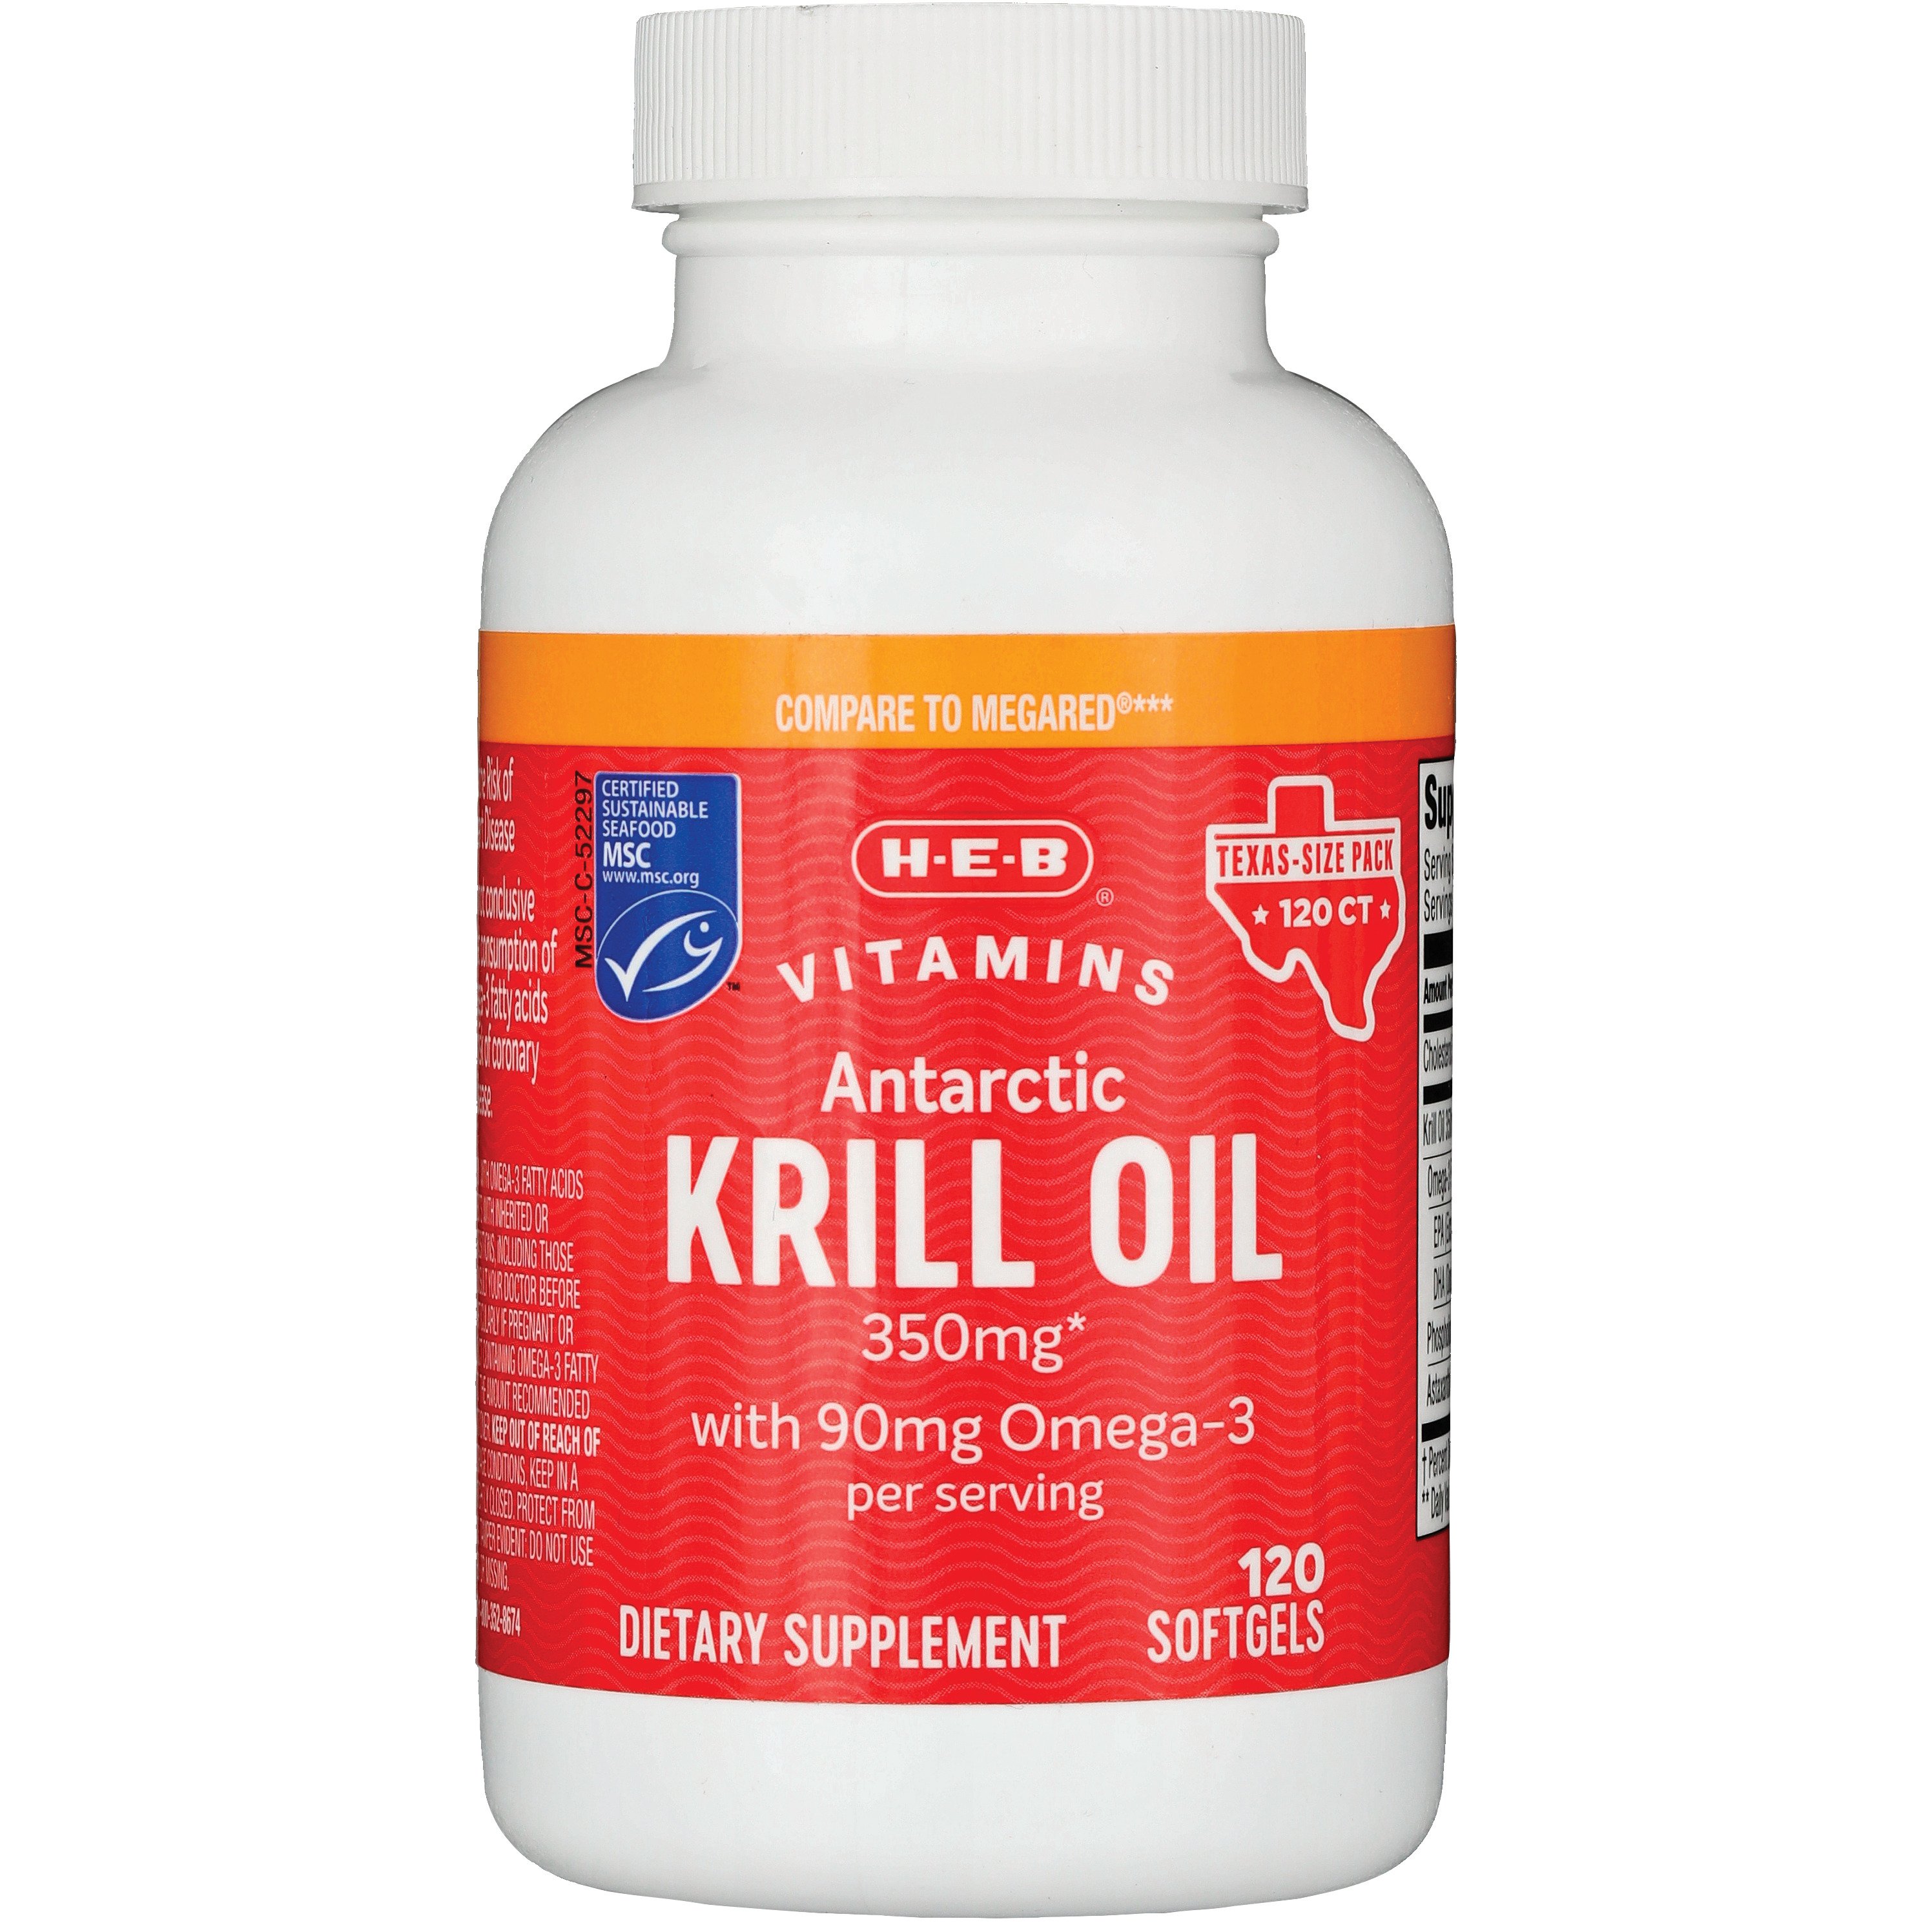 Krill Oil 350mg - Shop Diet & at H-E-B